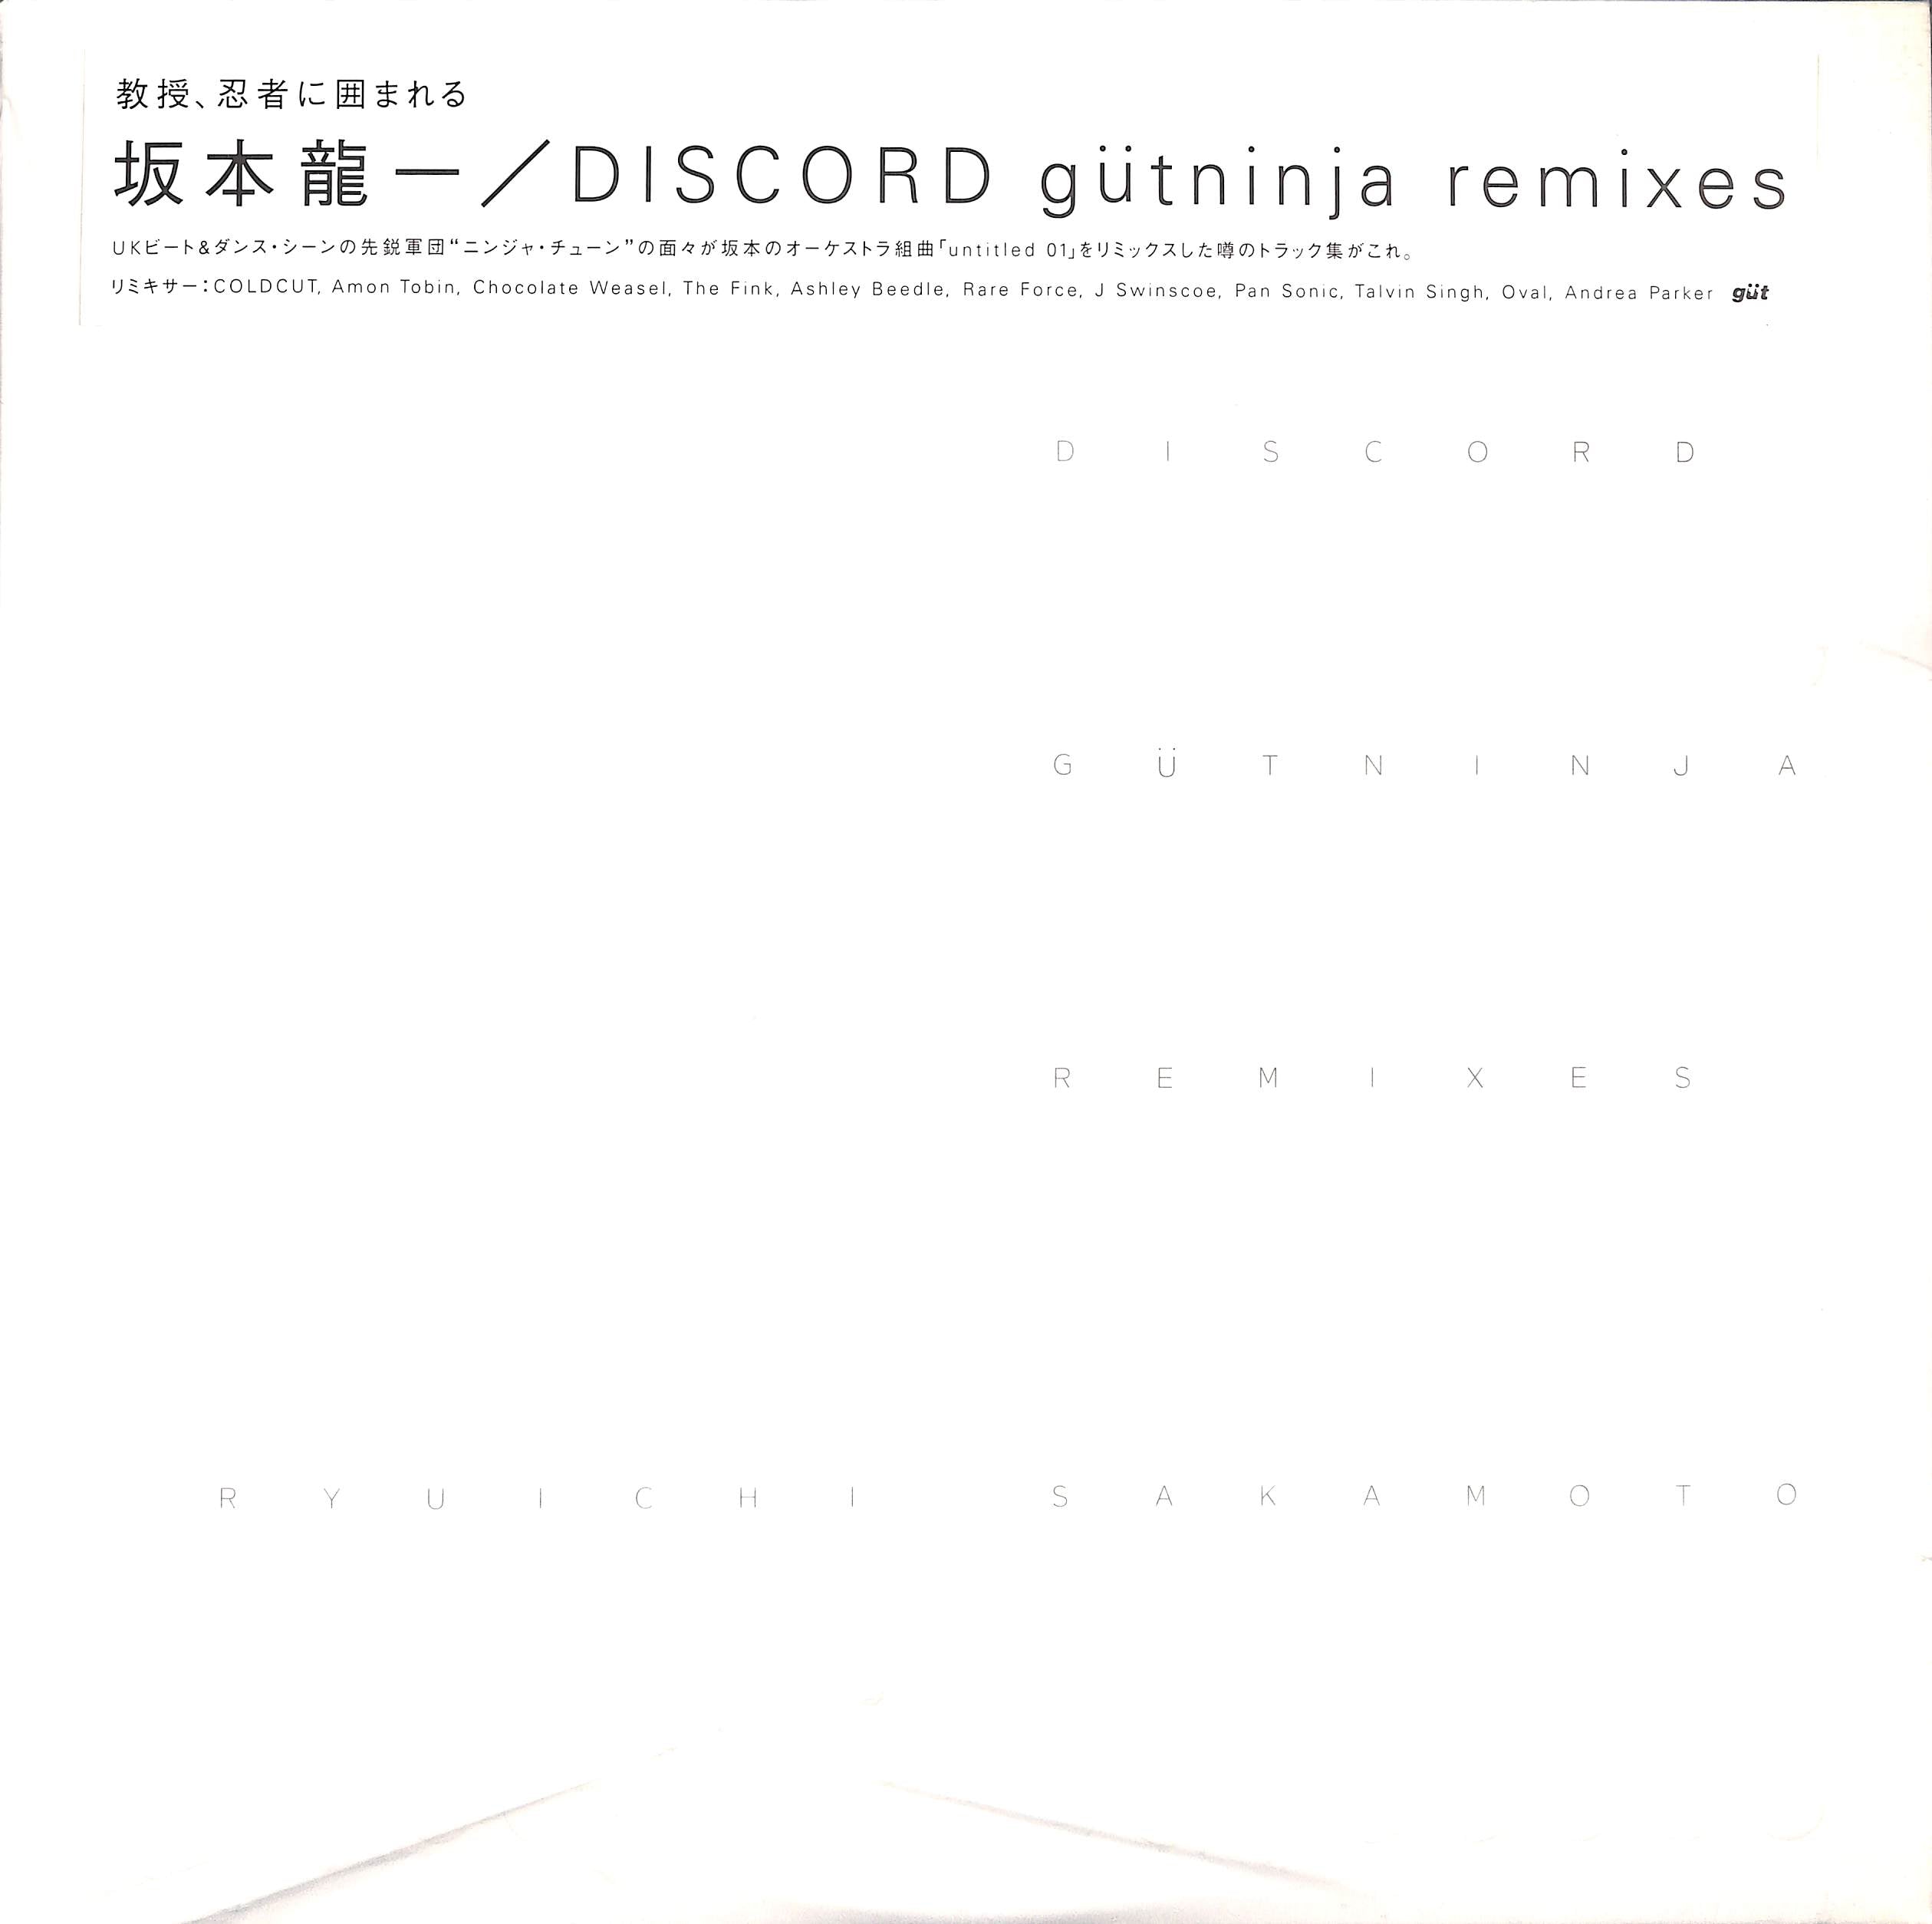 【LP】DISCORD gutninja remixes [12 inch Analog] 坂本龍一